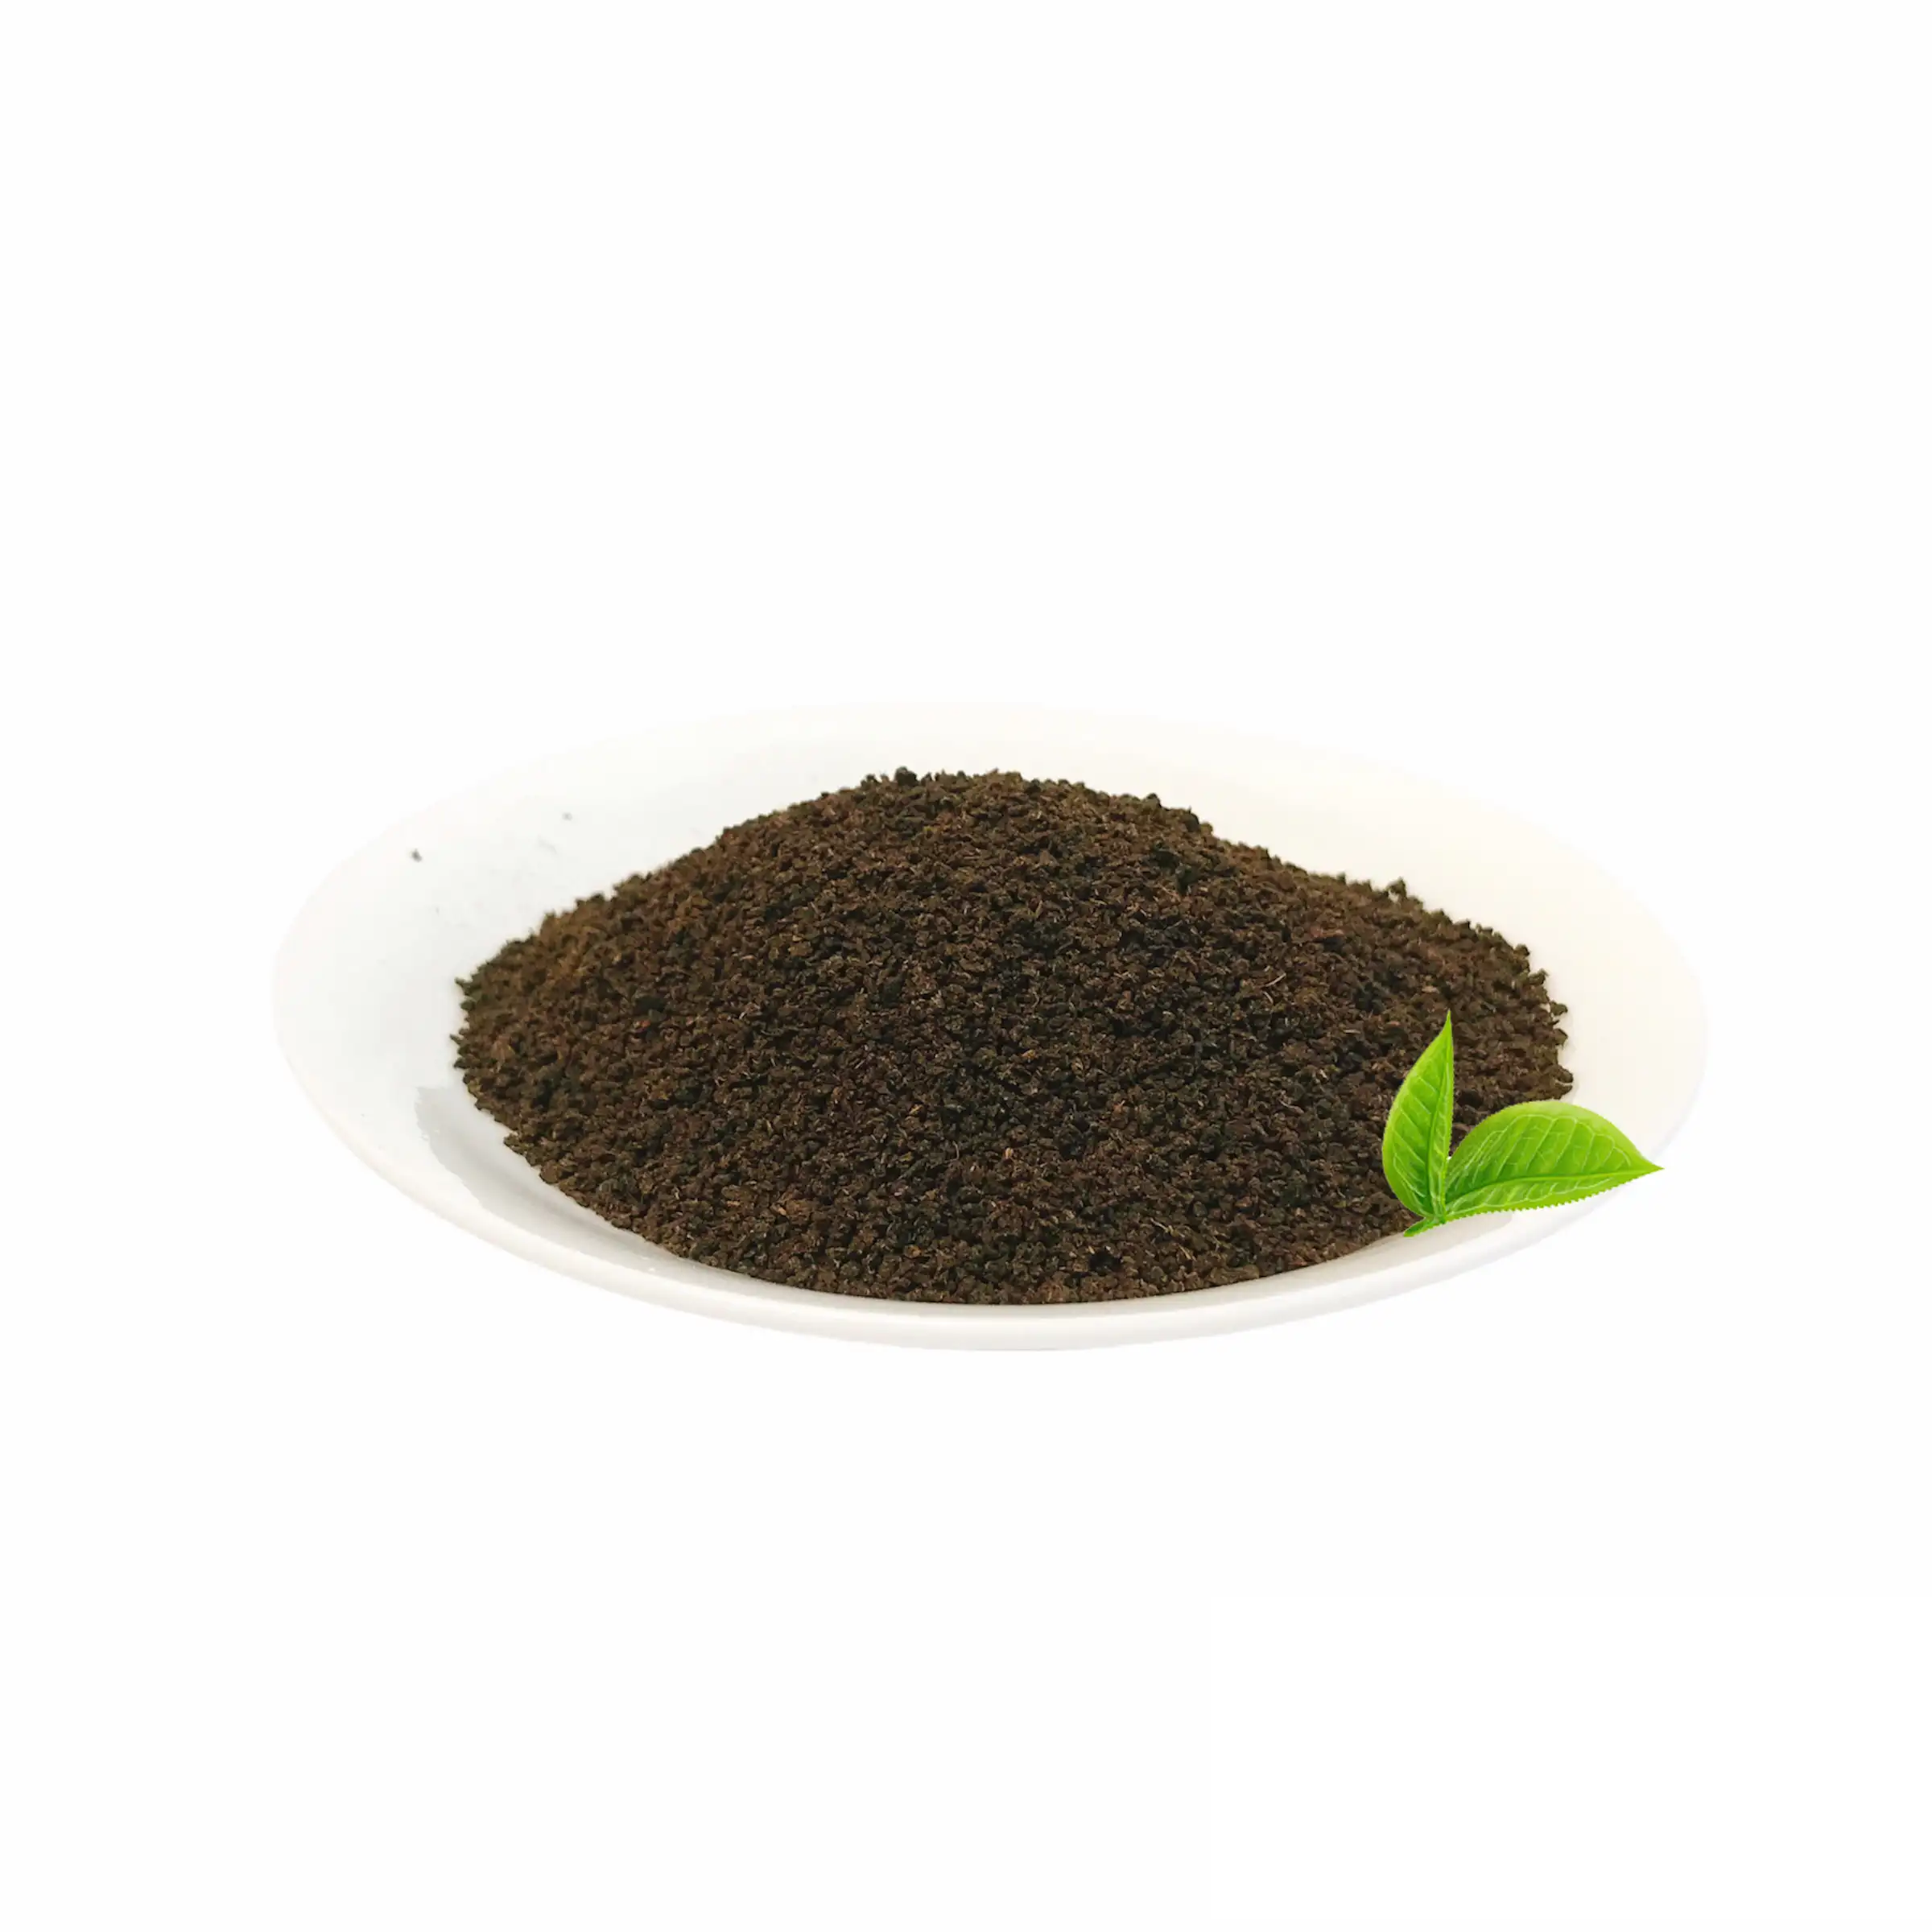 BP1 Black Tea 10kg Premium Ceylon Black Tea 100% Pure Organic Good For Health Care Best Selling Brand Supplier